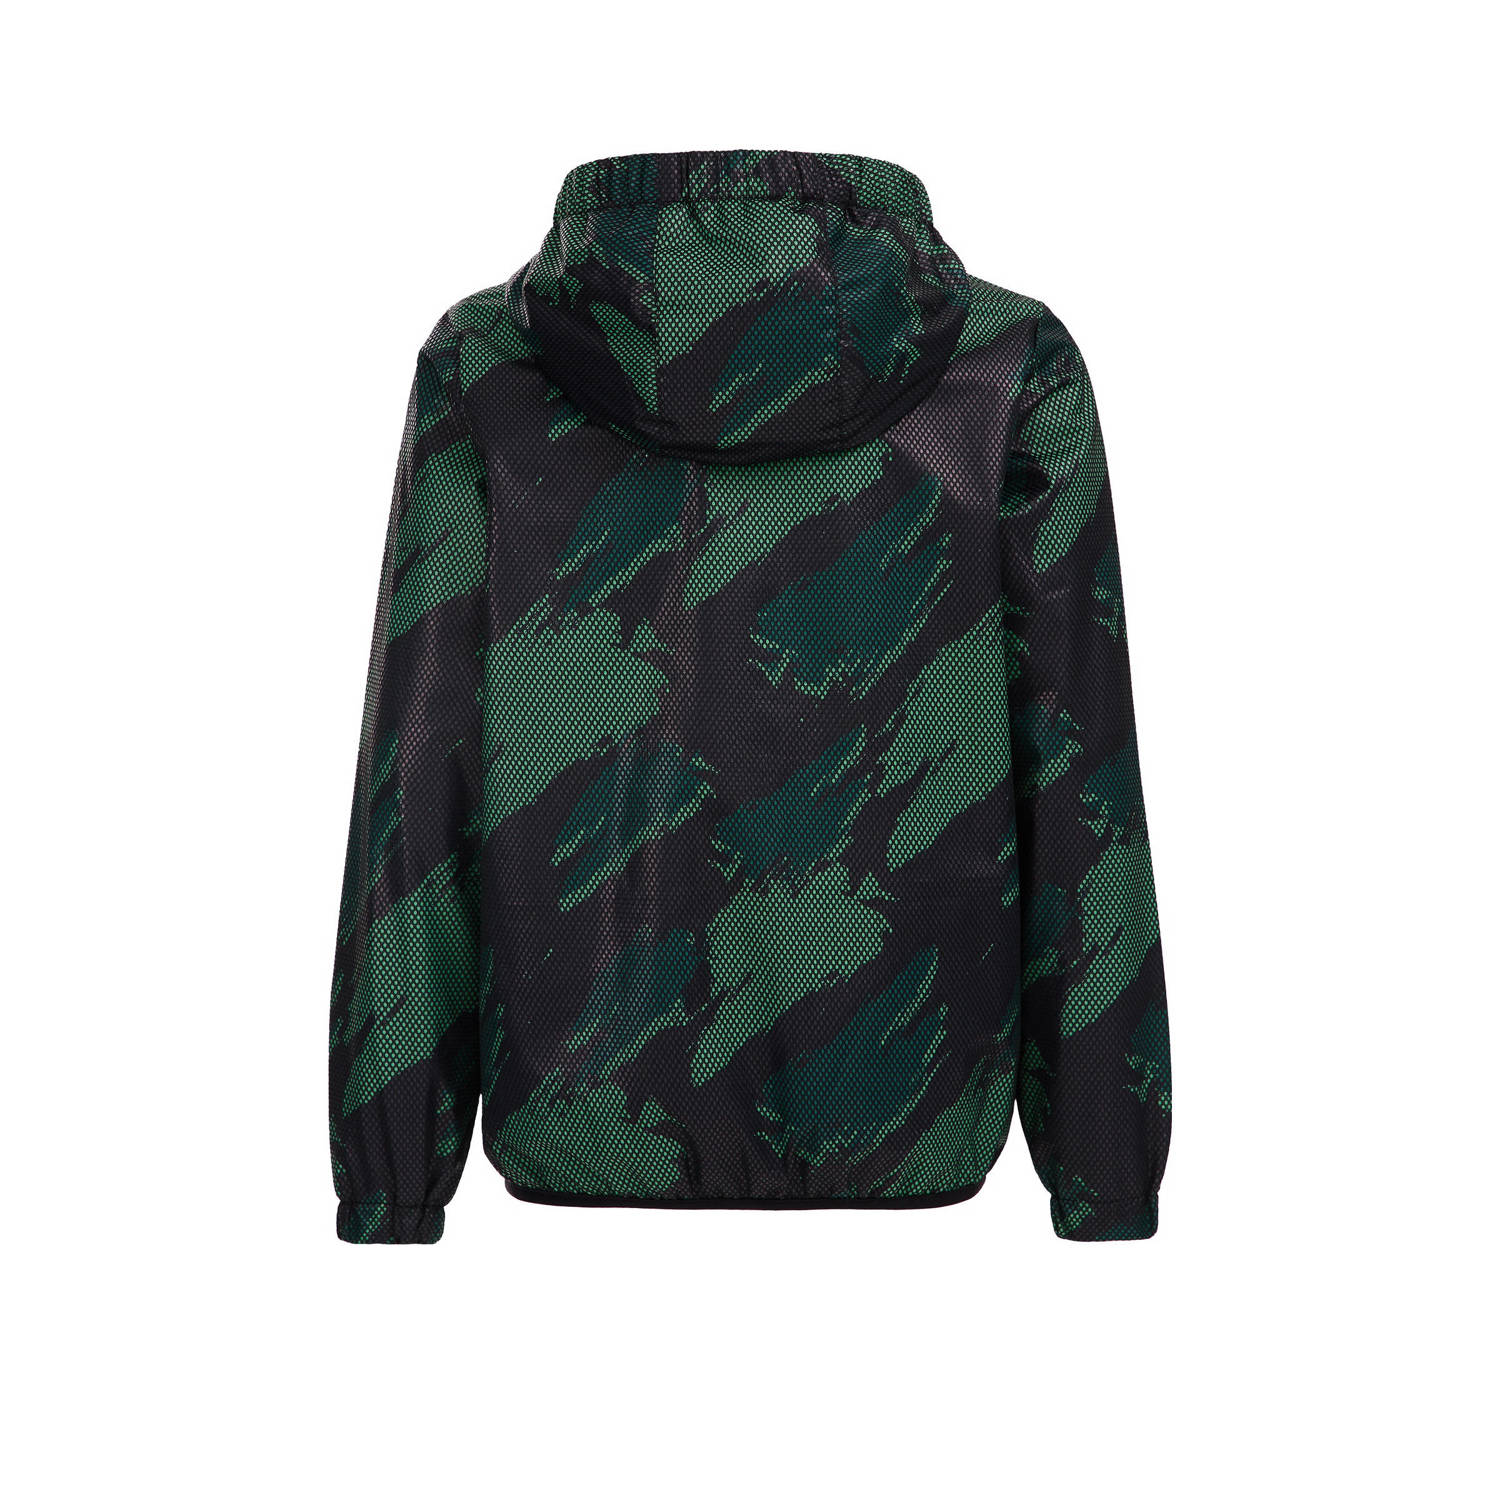 WE Fashion zomerjas met camouflageprint groen zwart